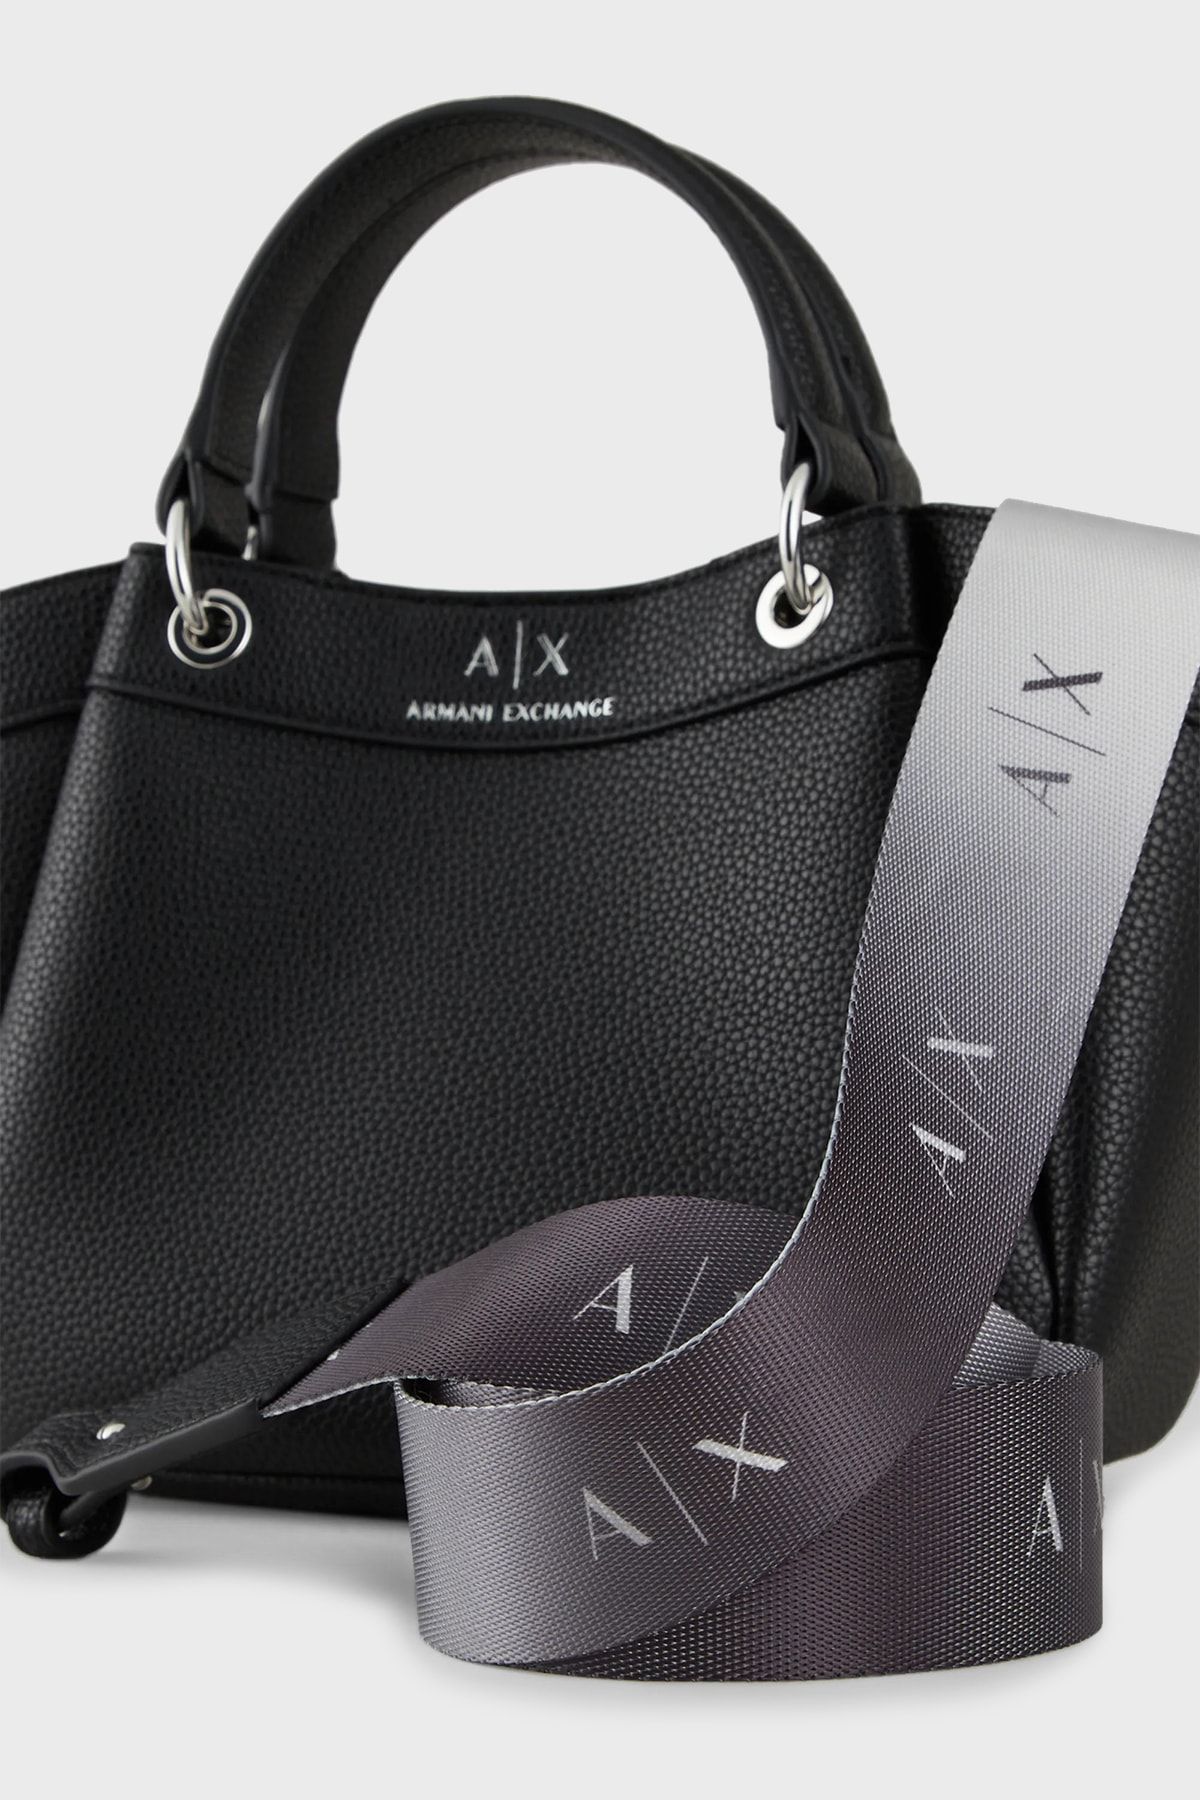 Patent leather handbag Armani Jeans Black in Patent leather - 36530213